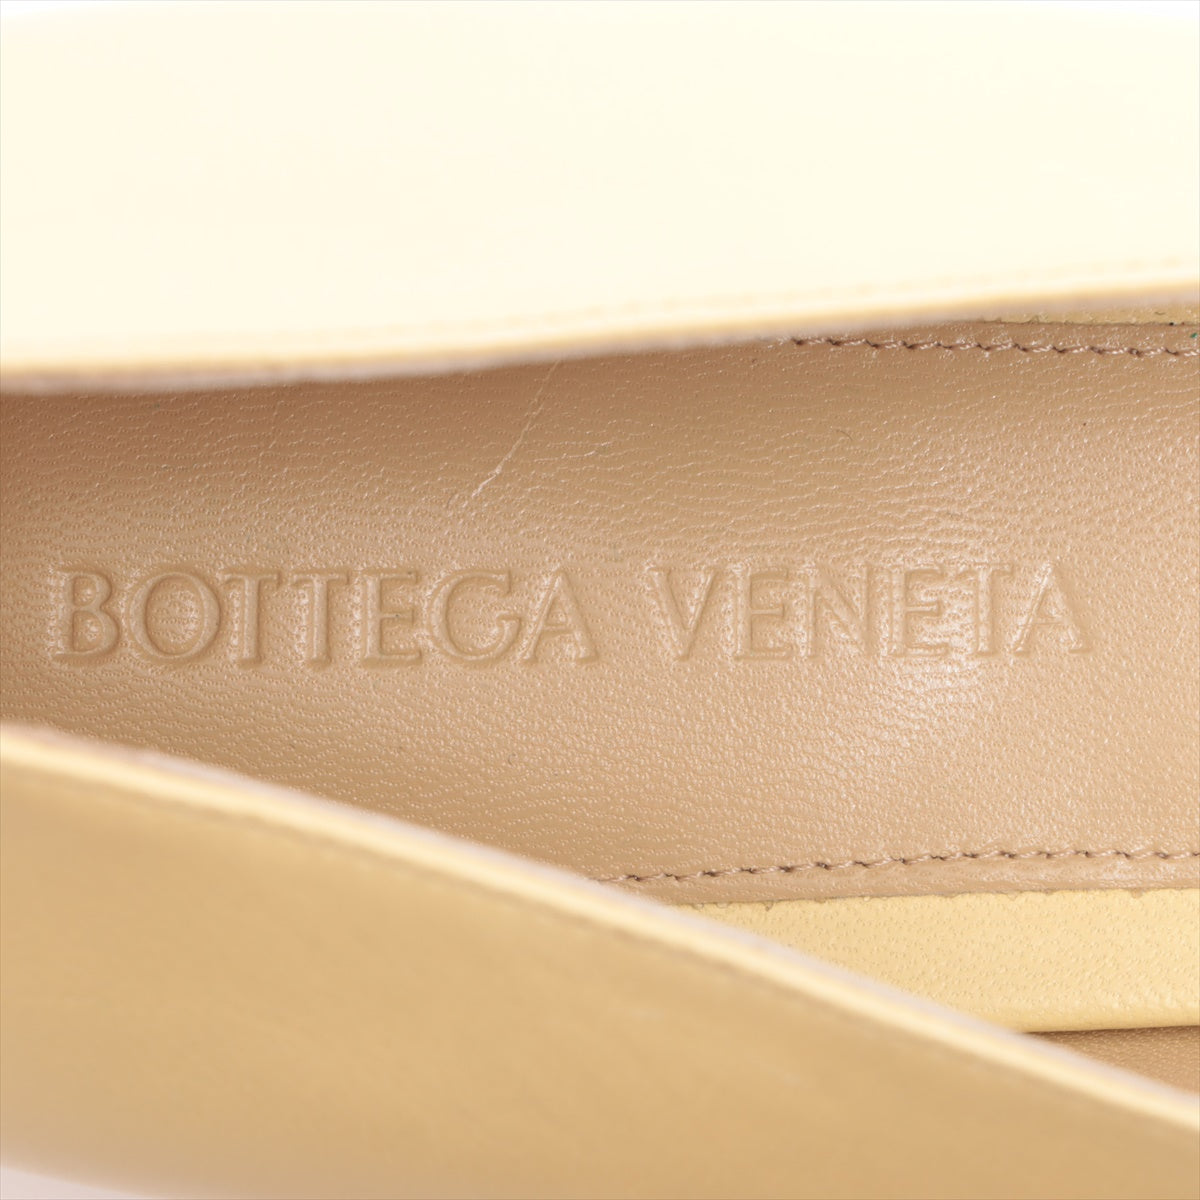 Bottega Veneta 翻蓋高跟鞋 37 黃色杏仁